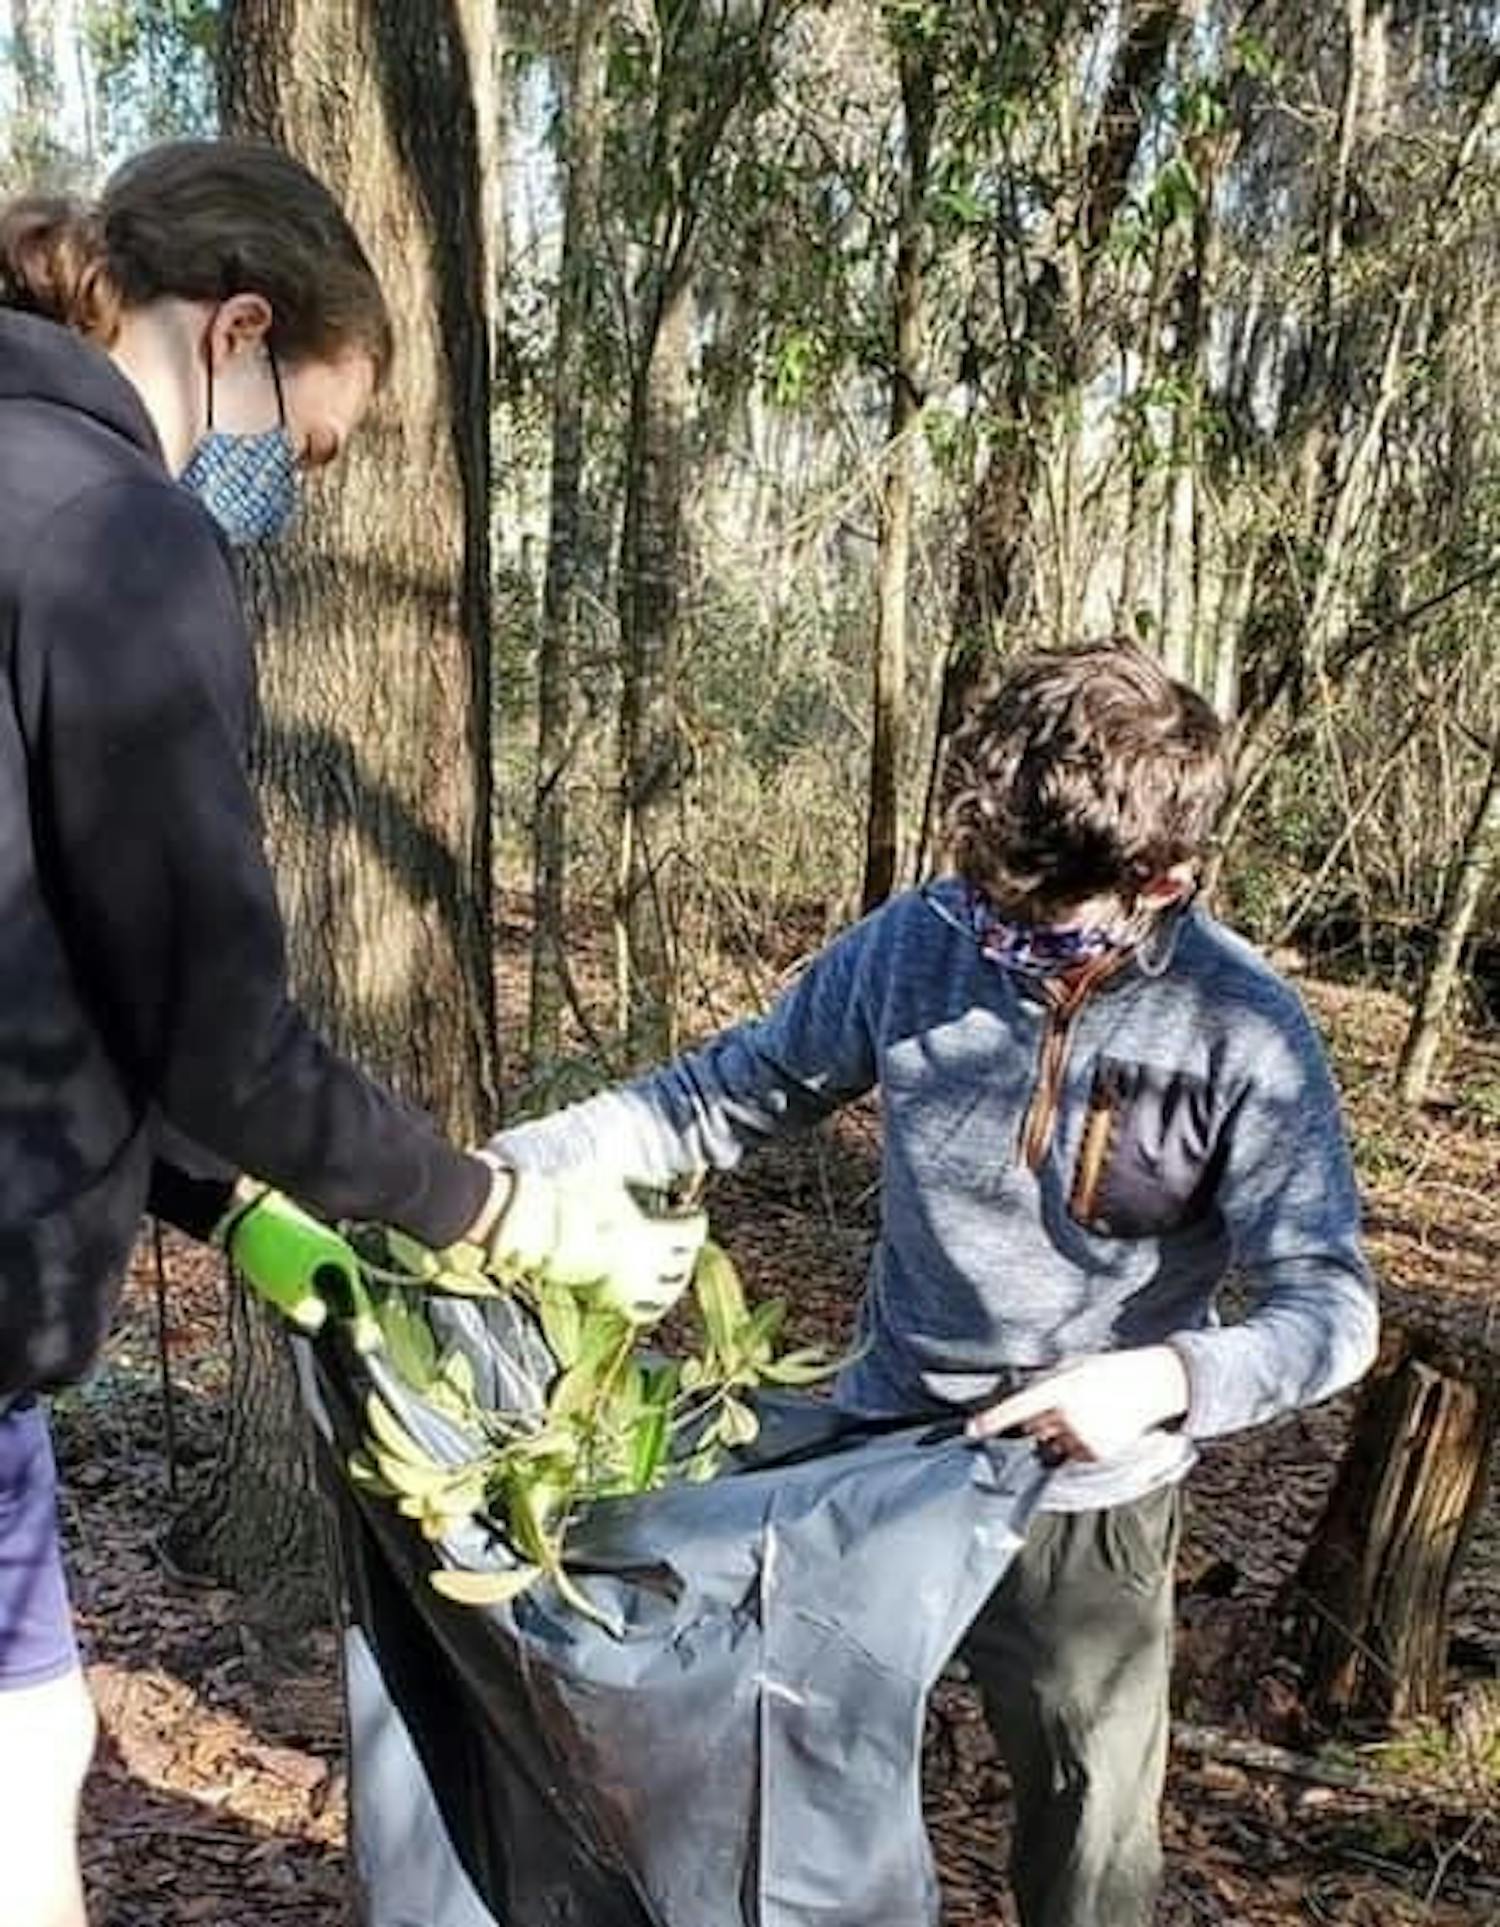 Boy Scout Troop 125 places invasive plants into a plastic trash bag for proper disposal. [Photo courtesy of Rich Bennett]